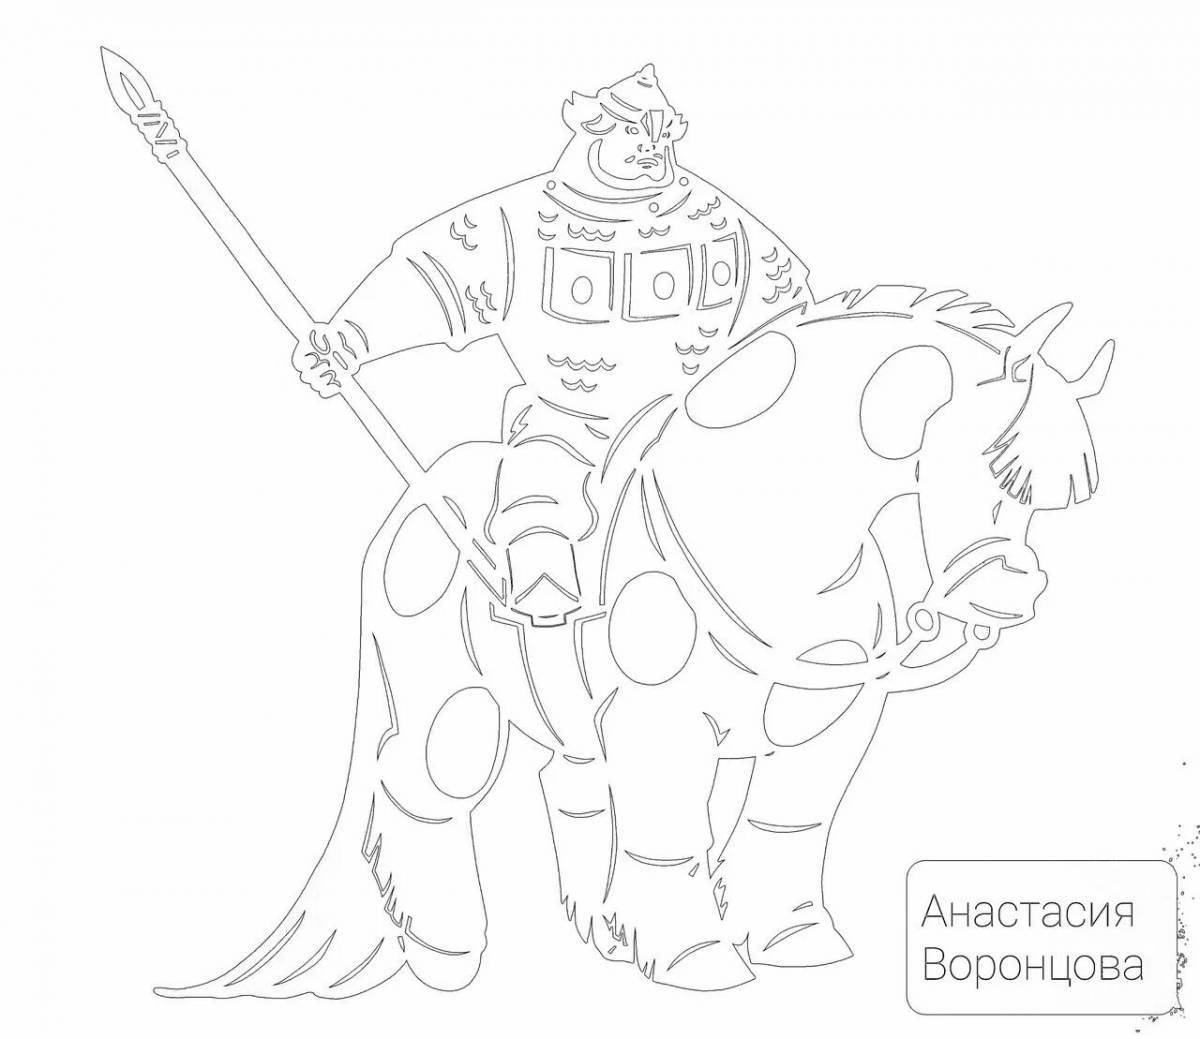 Exquisite heroes of the Russian land for preschoolers